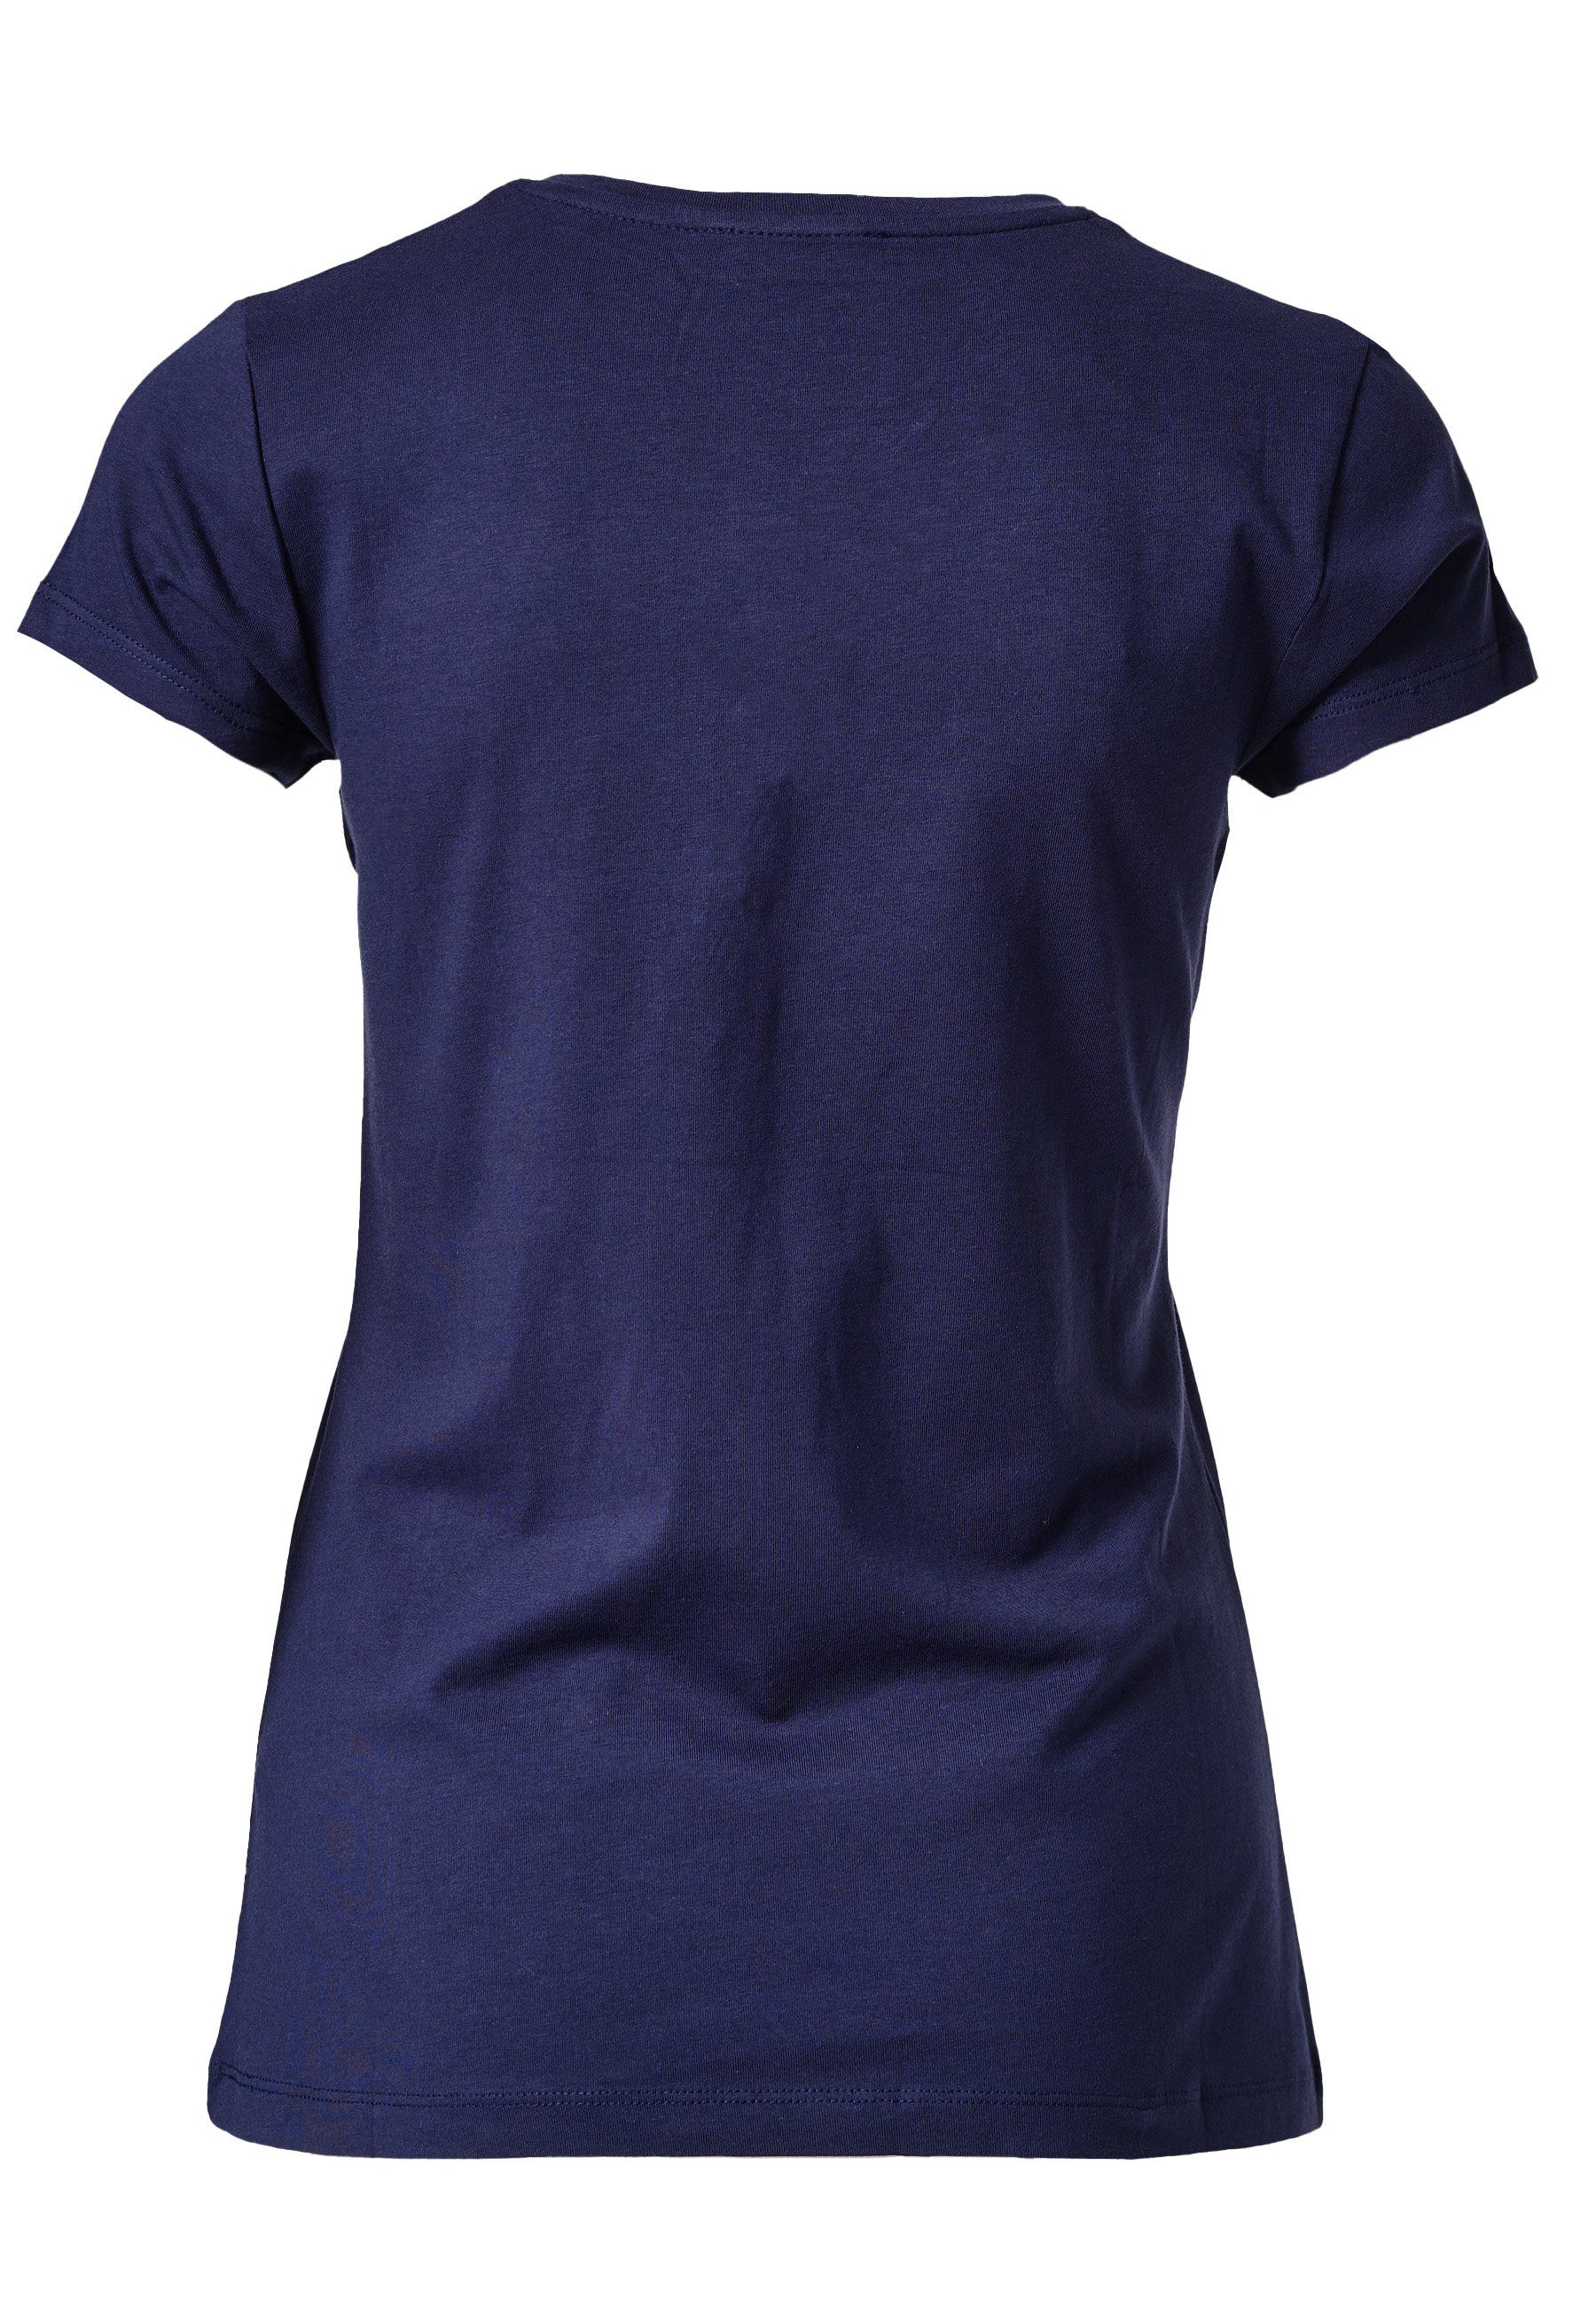 Decay T-Shirt mit Front-Print blau